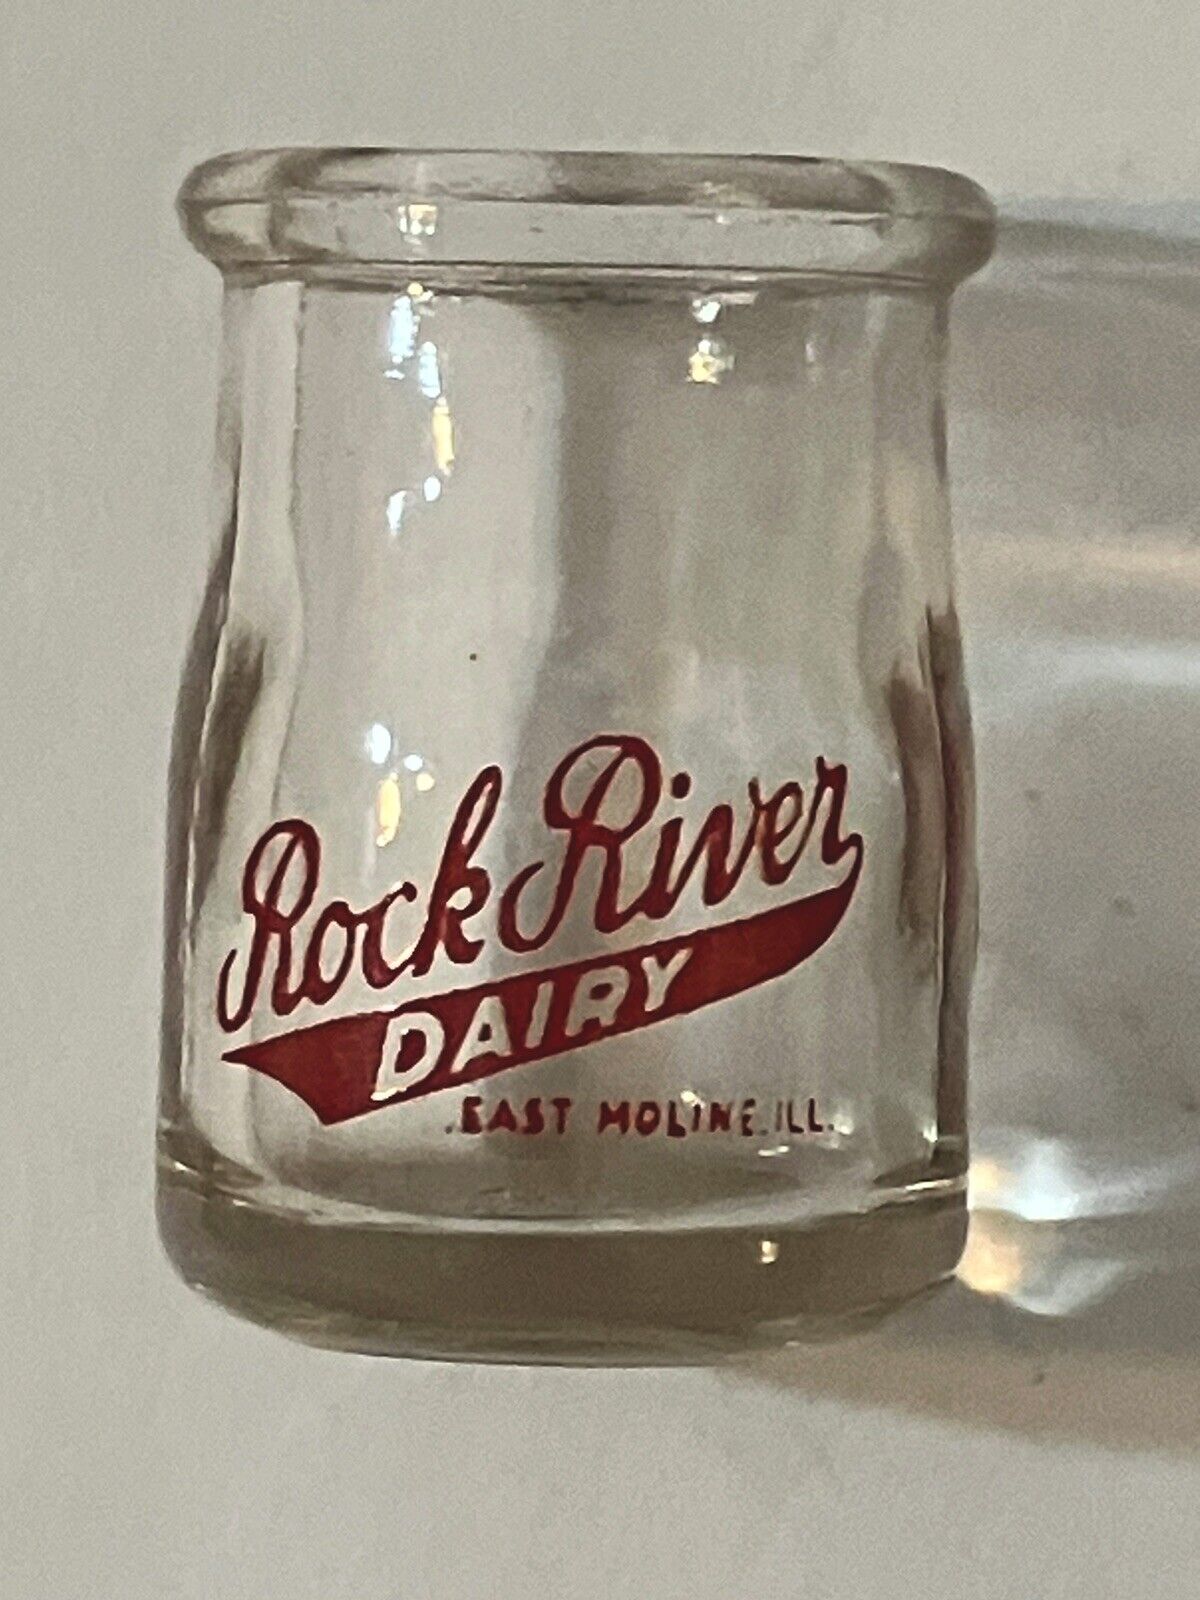 Rare ROCK RIVER DAIRY-East Moline,Ill Advertising Glass Creamer